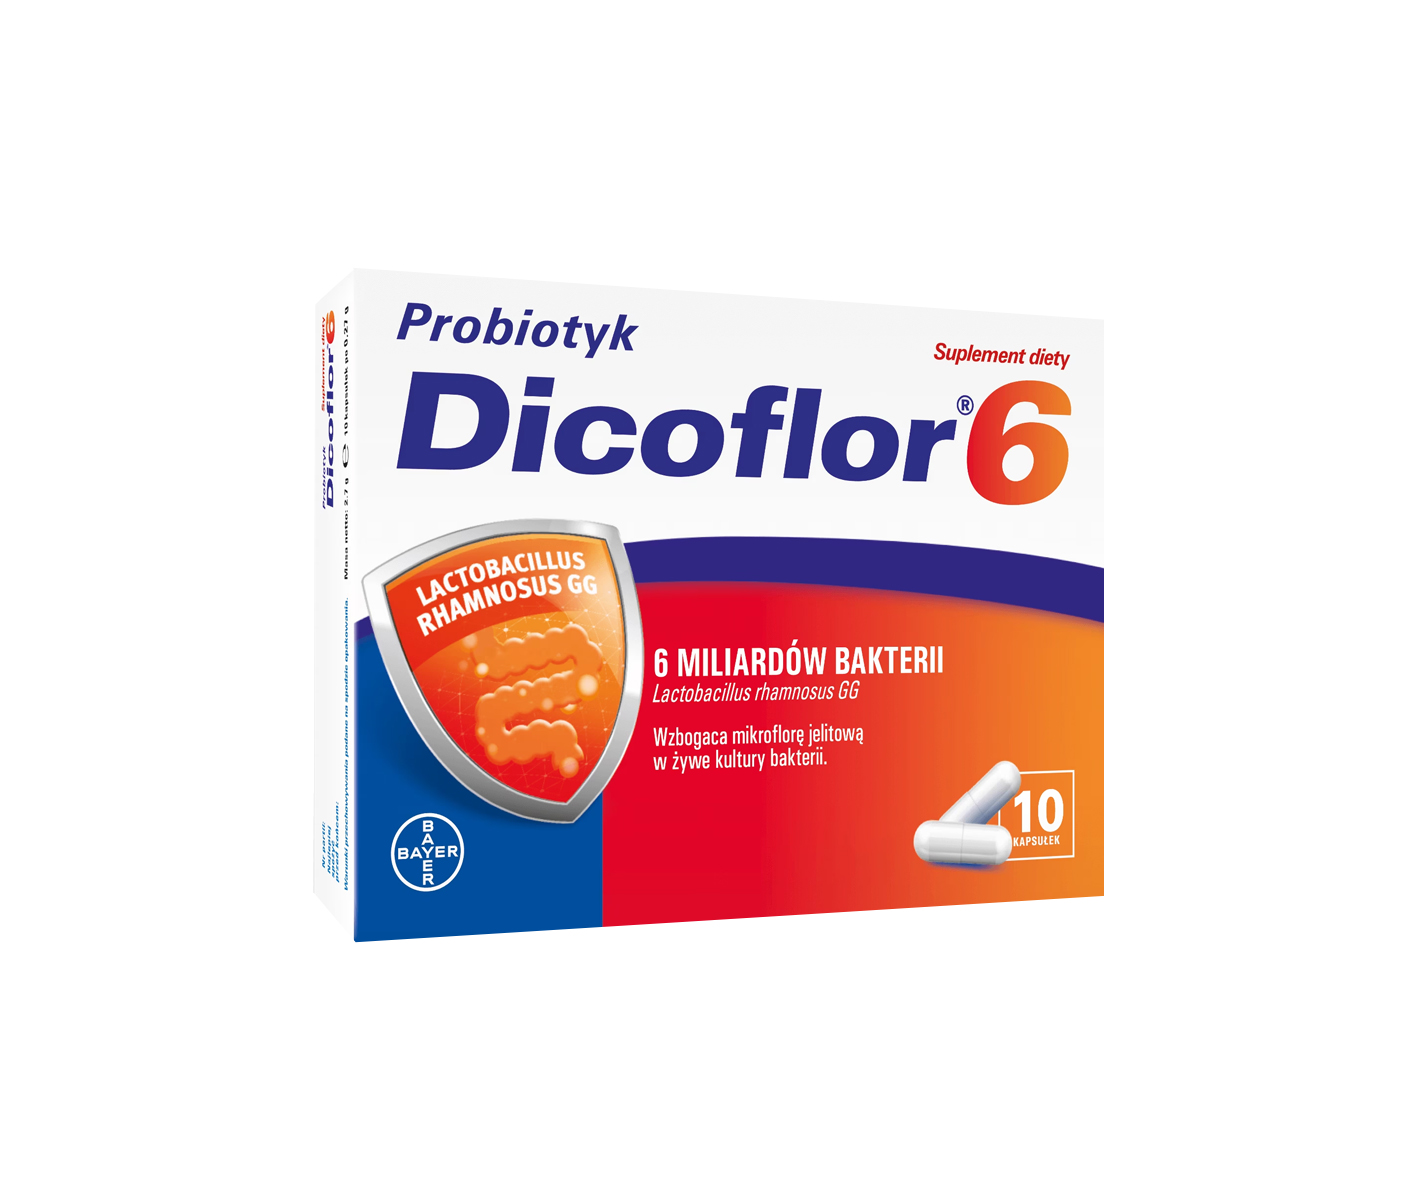 Dicoflor 6, probiotic